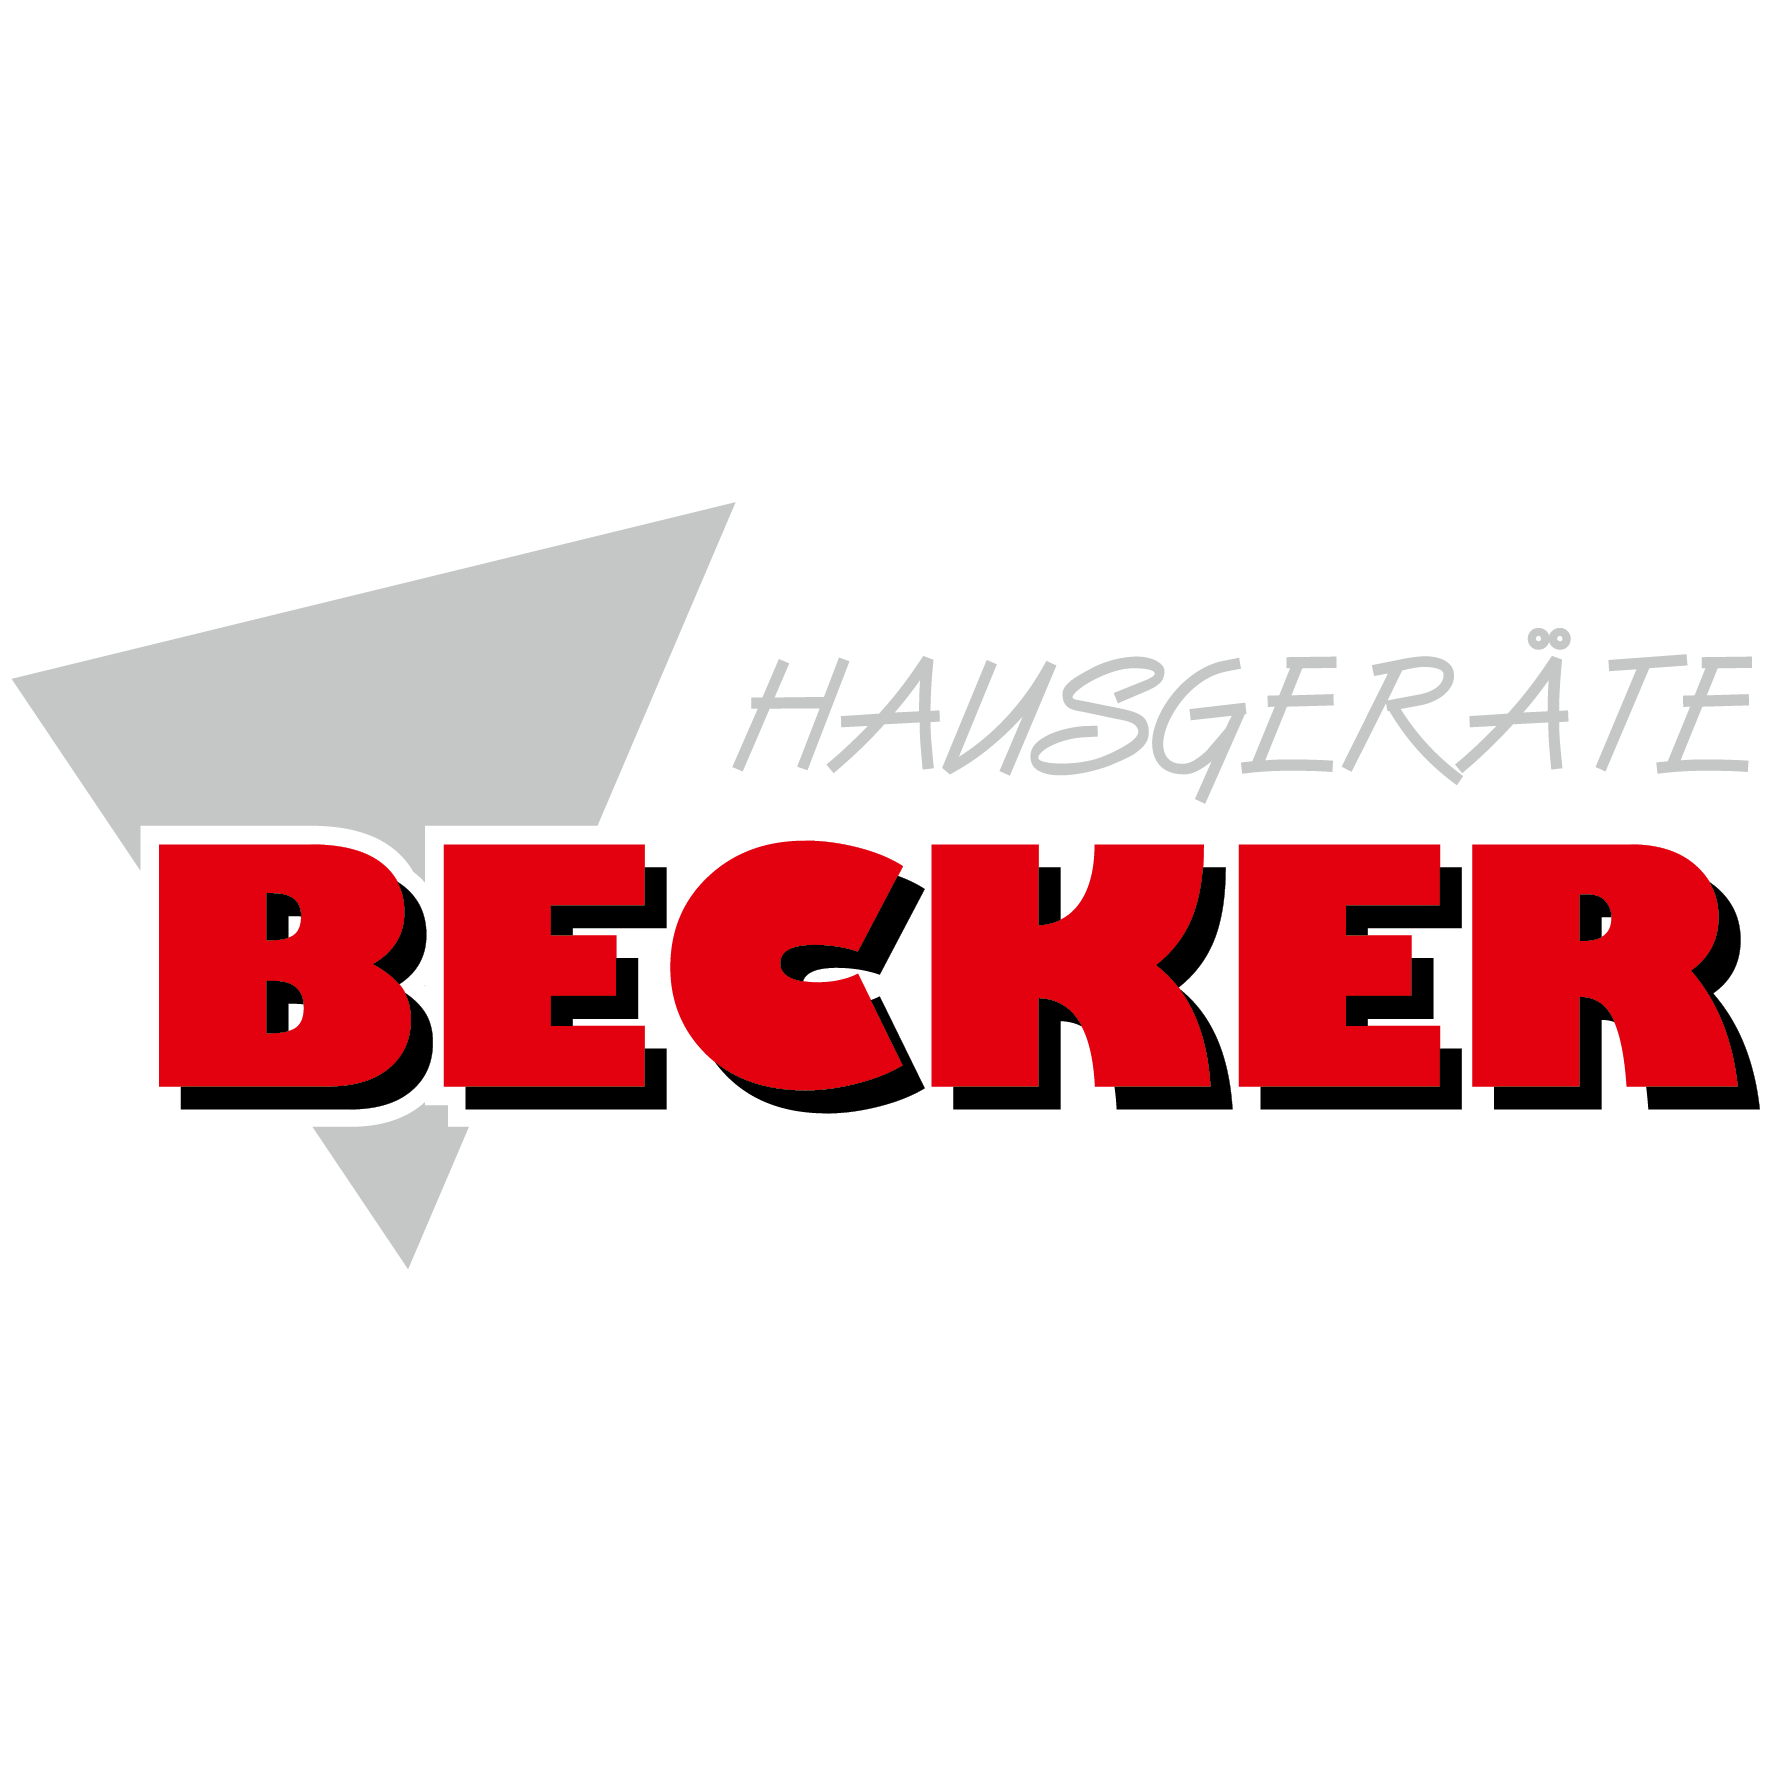 Alexander Becker Hausgeräte-Service in Osterode am Harz - Logo